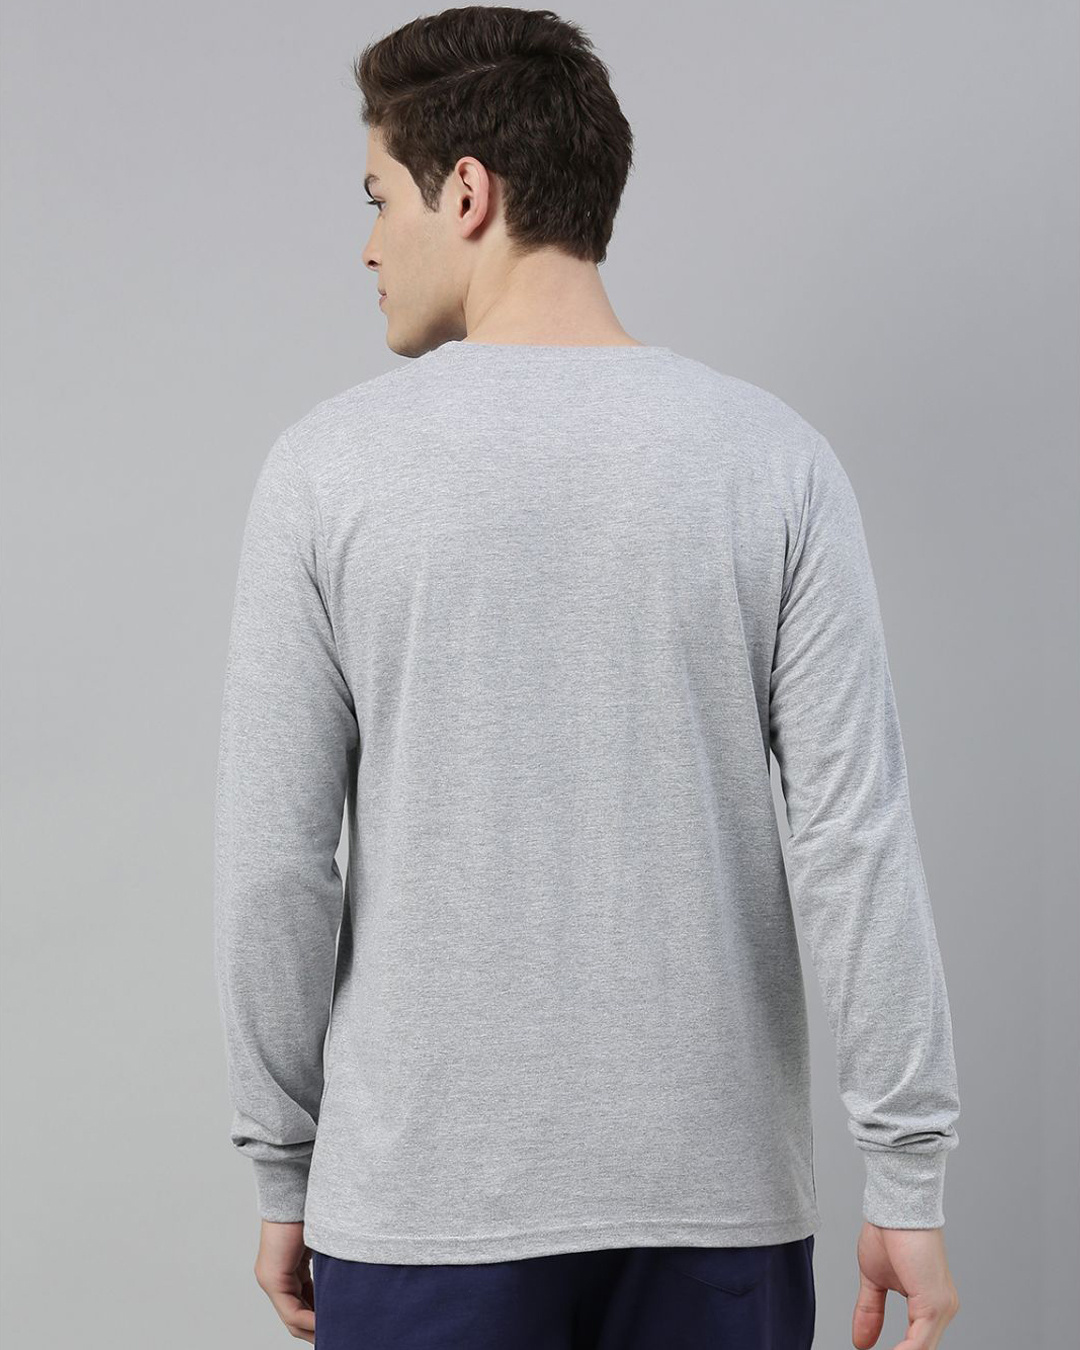 Shop Grey Solid T Shirt-Back